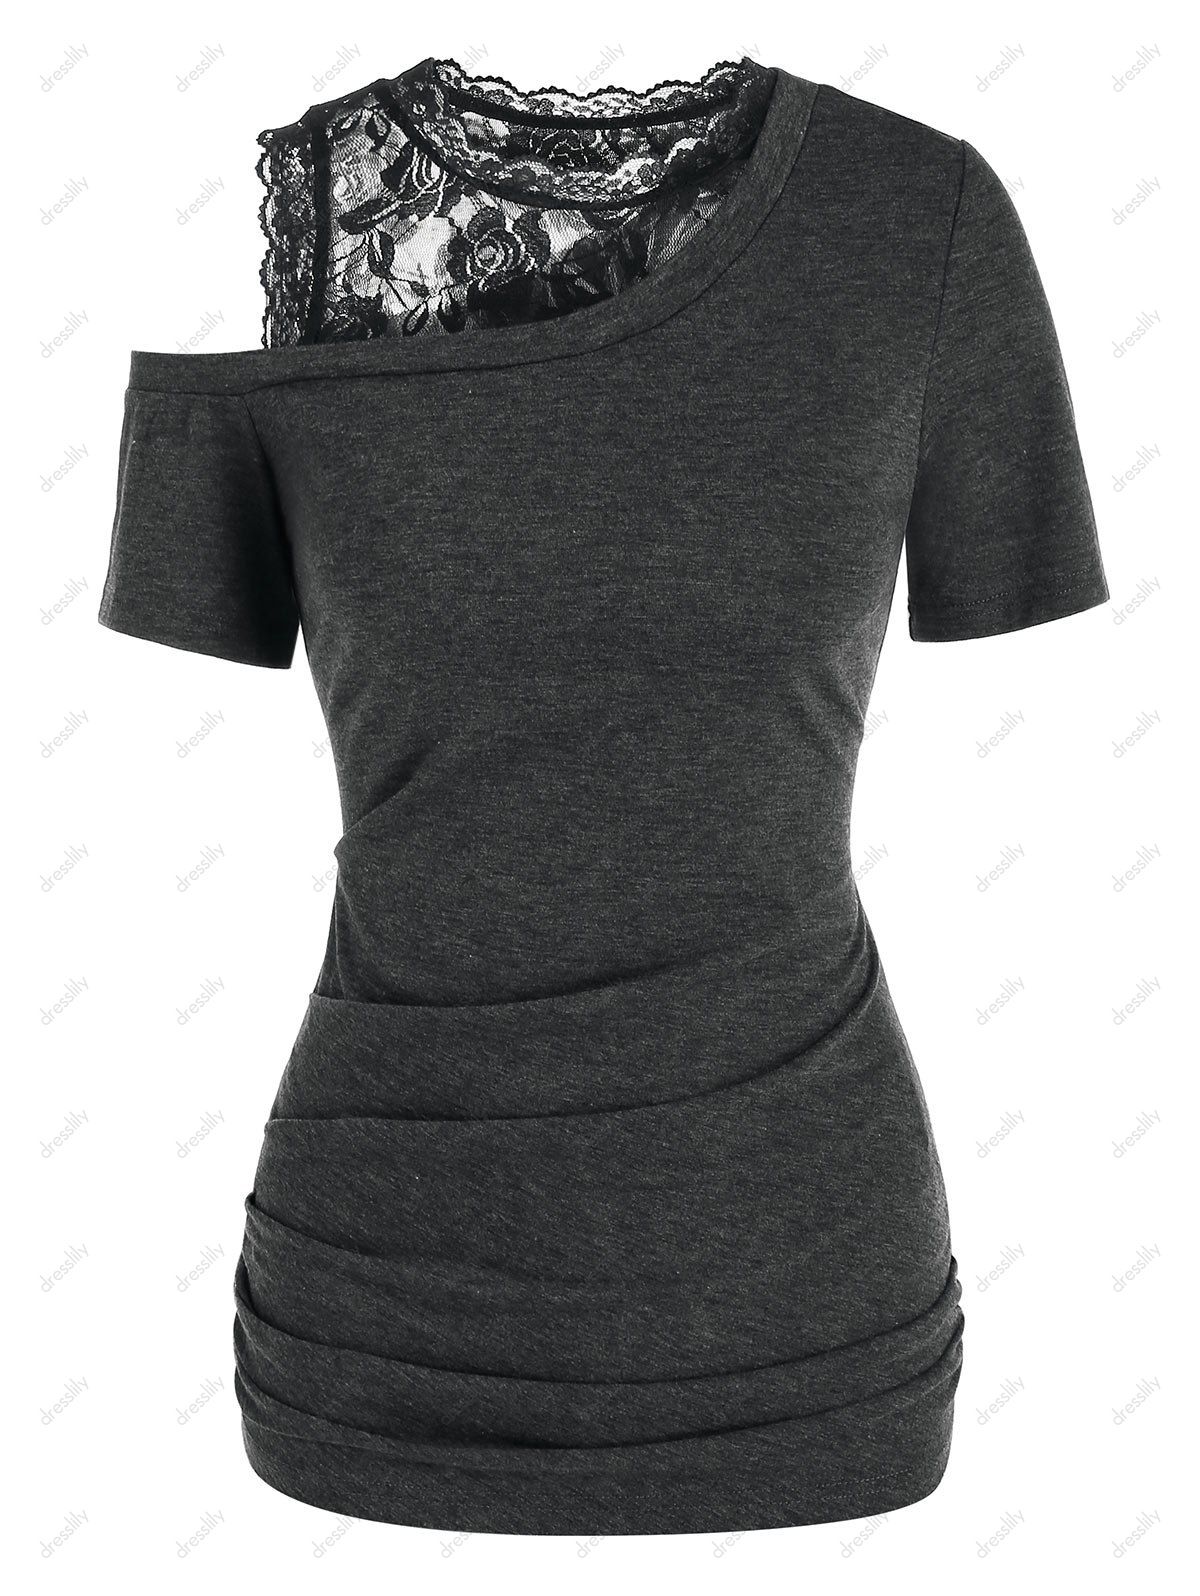 Lace Skew Collar Ruched Tunic T Shirt - DARK GRAY XL